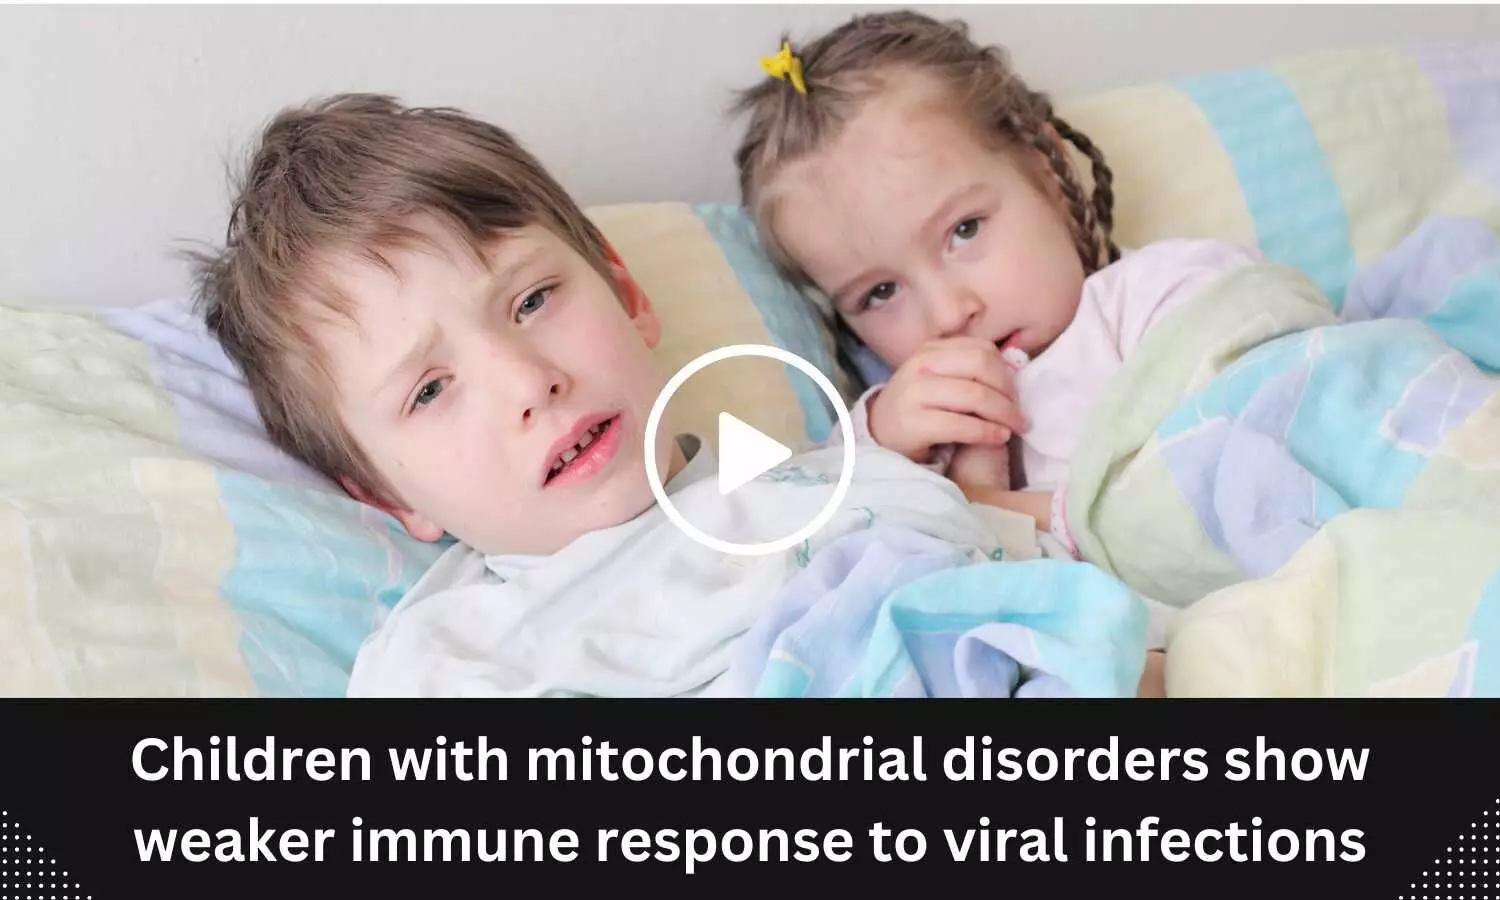 Viral Attack - Immune System for Kids